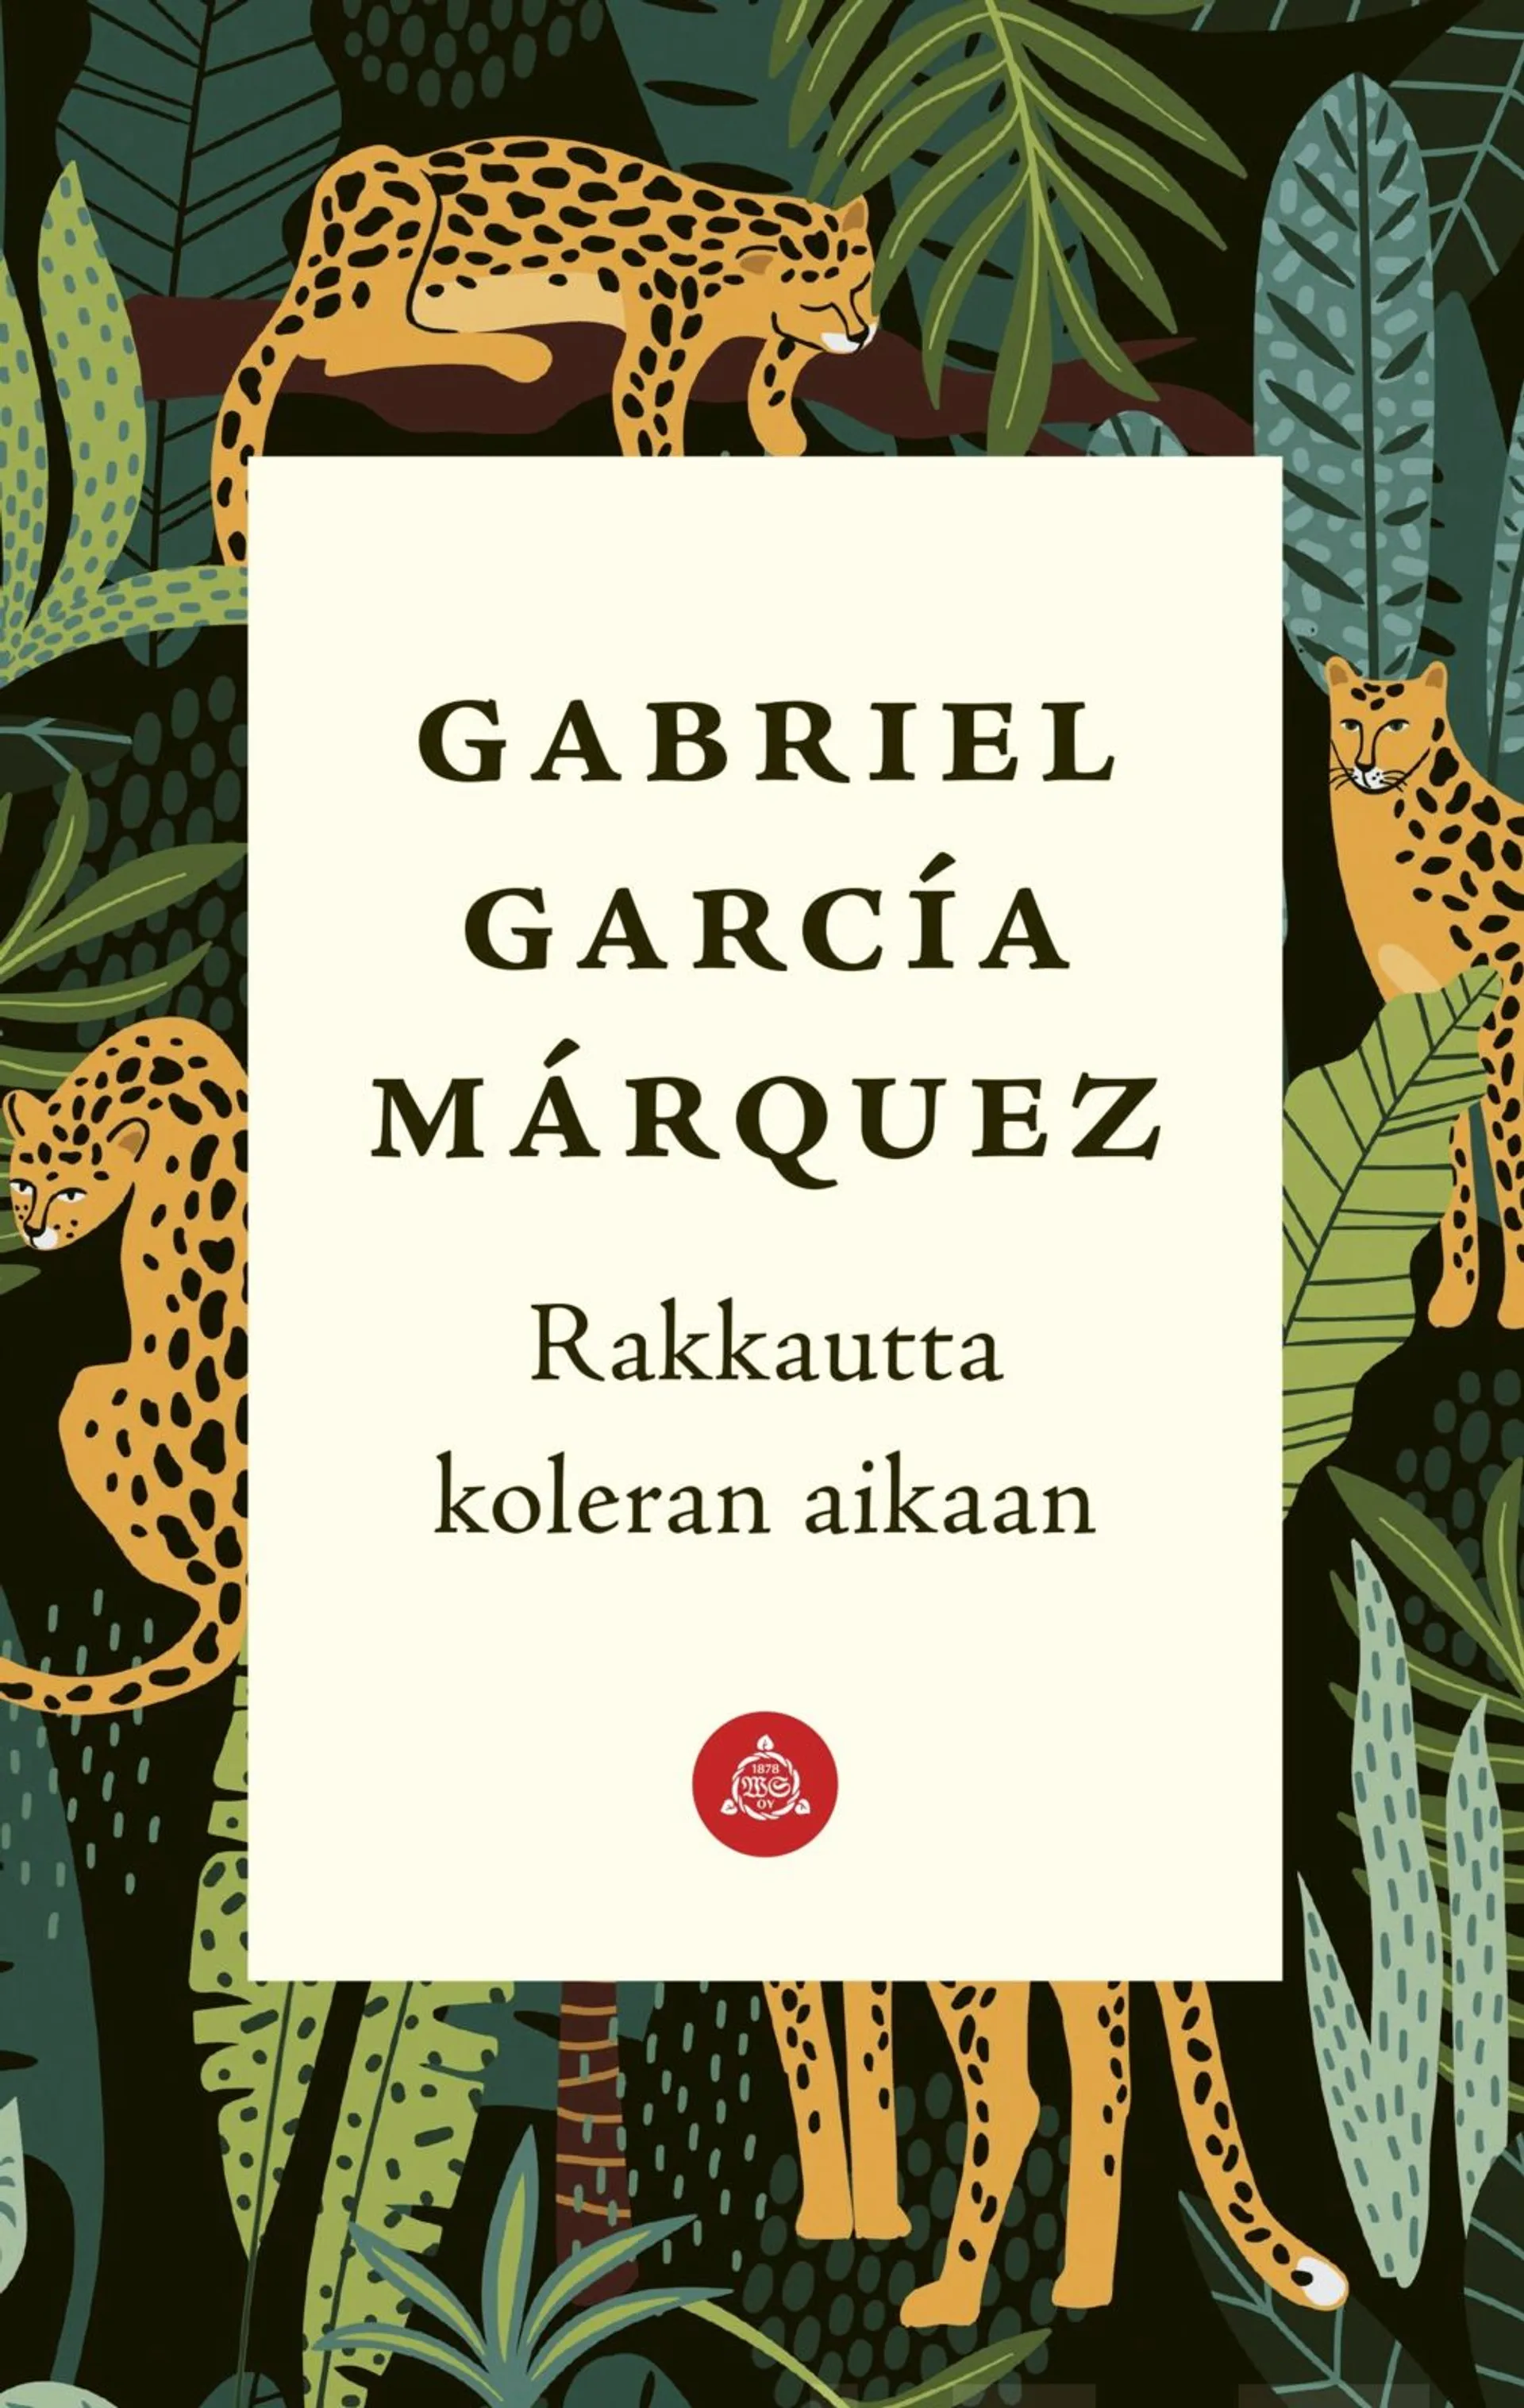 García Márquez, Rakkautta koleran aikaan